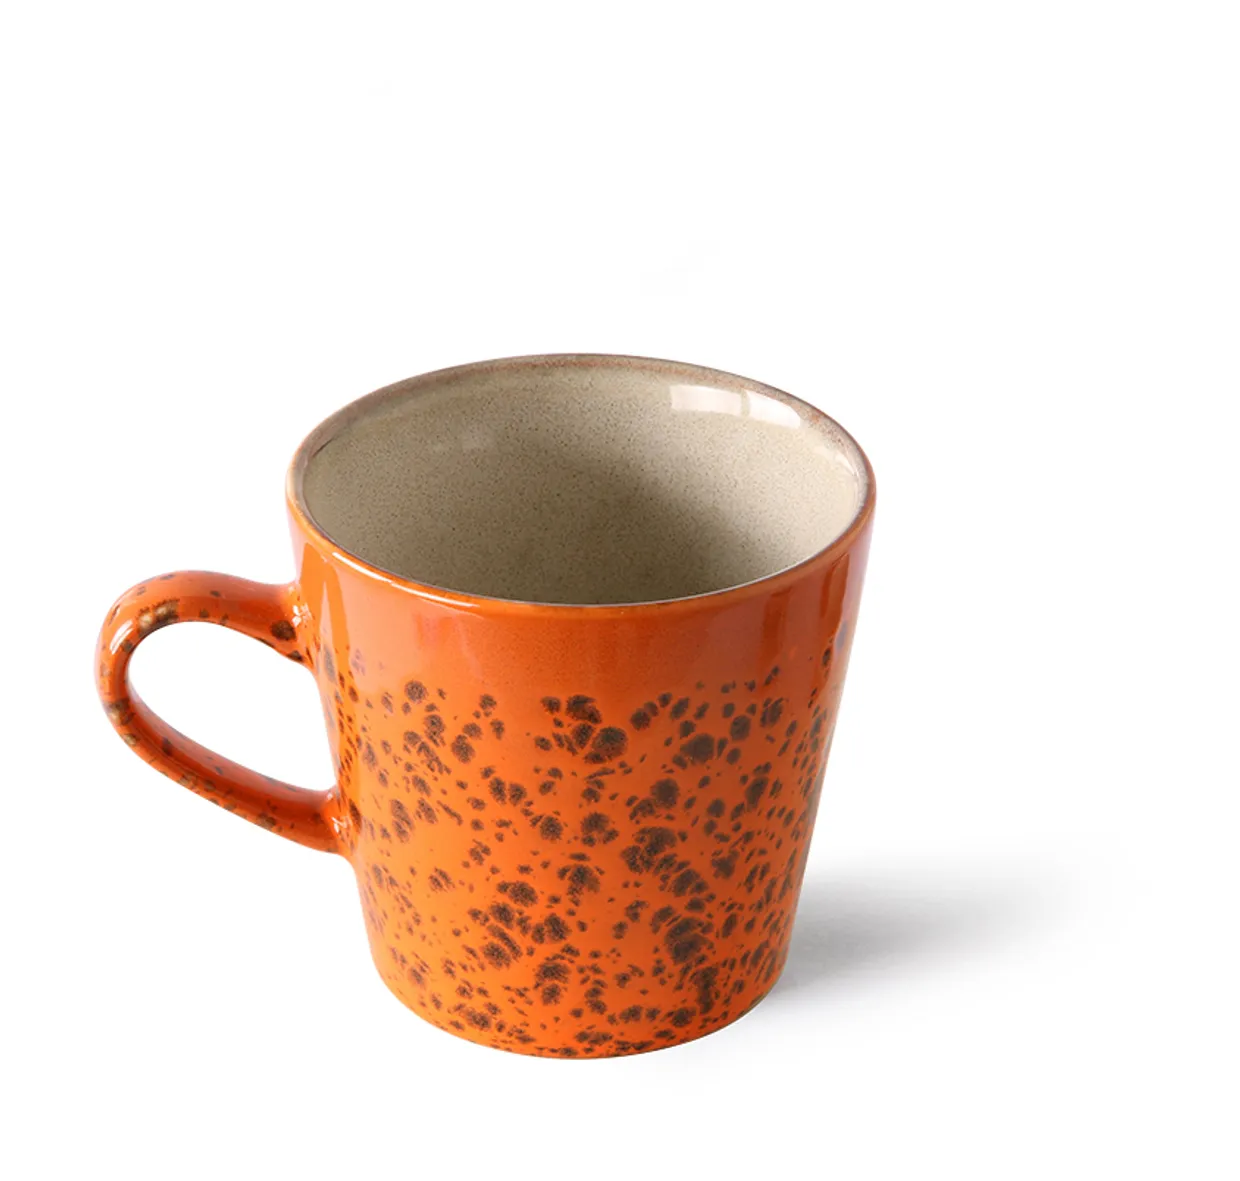 70s ceramics: americano mug, magma